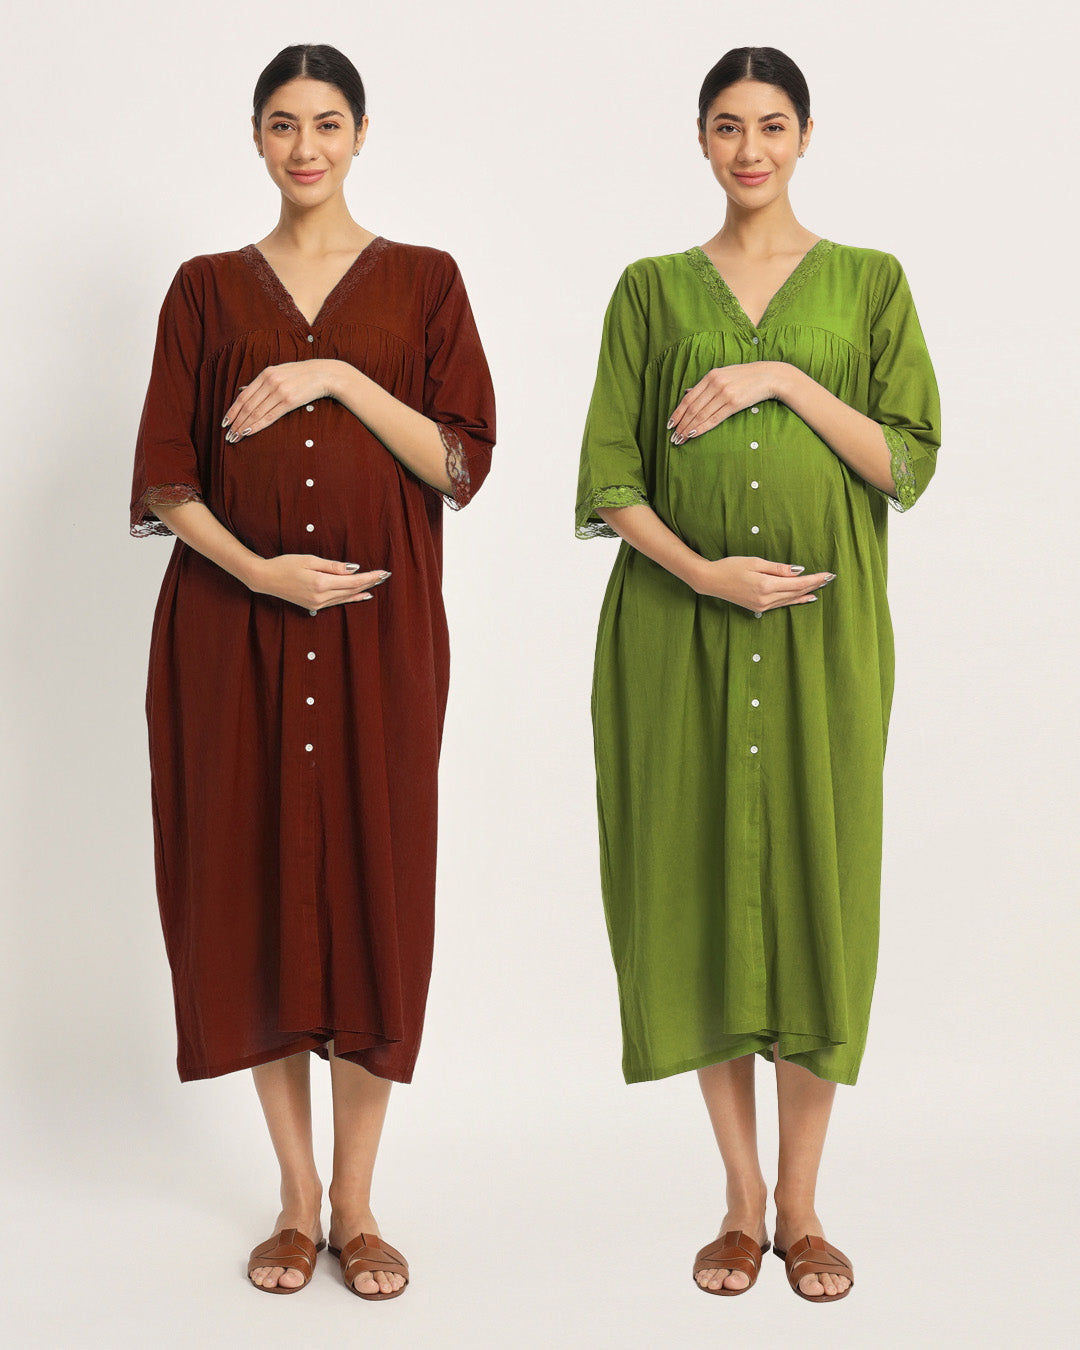 Combo: Russet Red & Sage Green Stylish Preggo Maternity & Nursing Dress - Set of 2